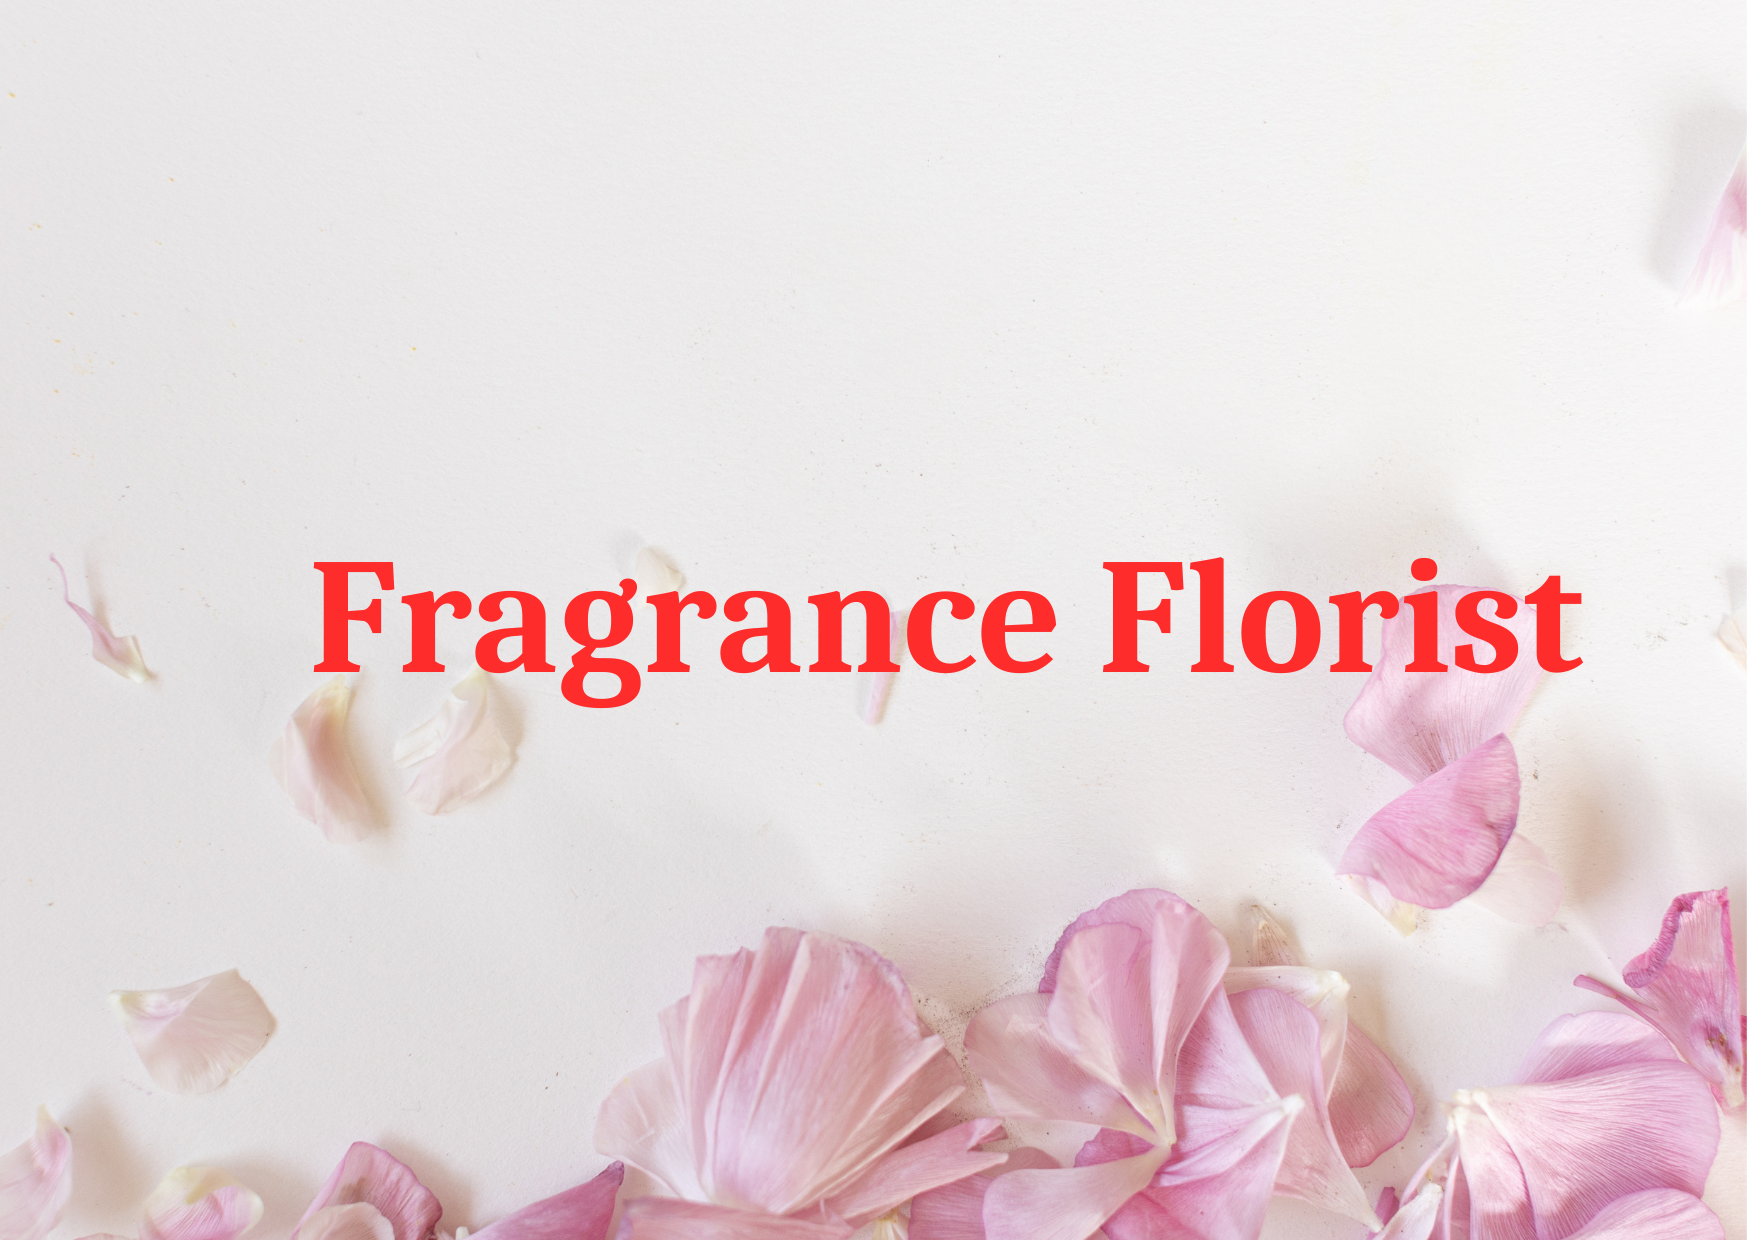 Fragrance Florist,   